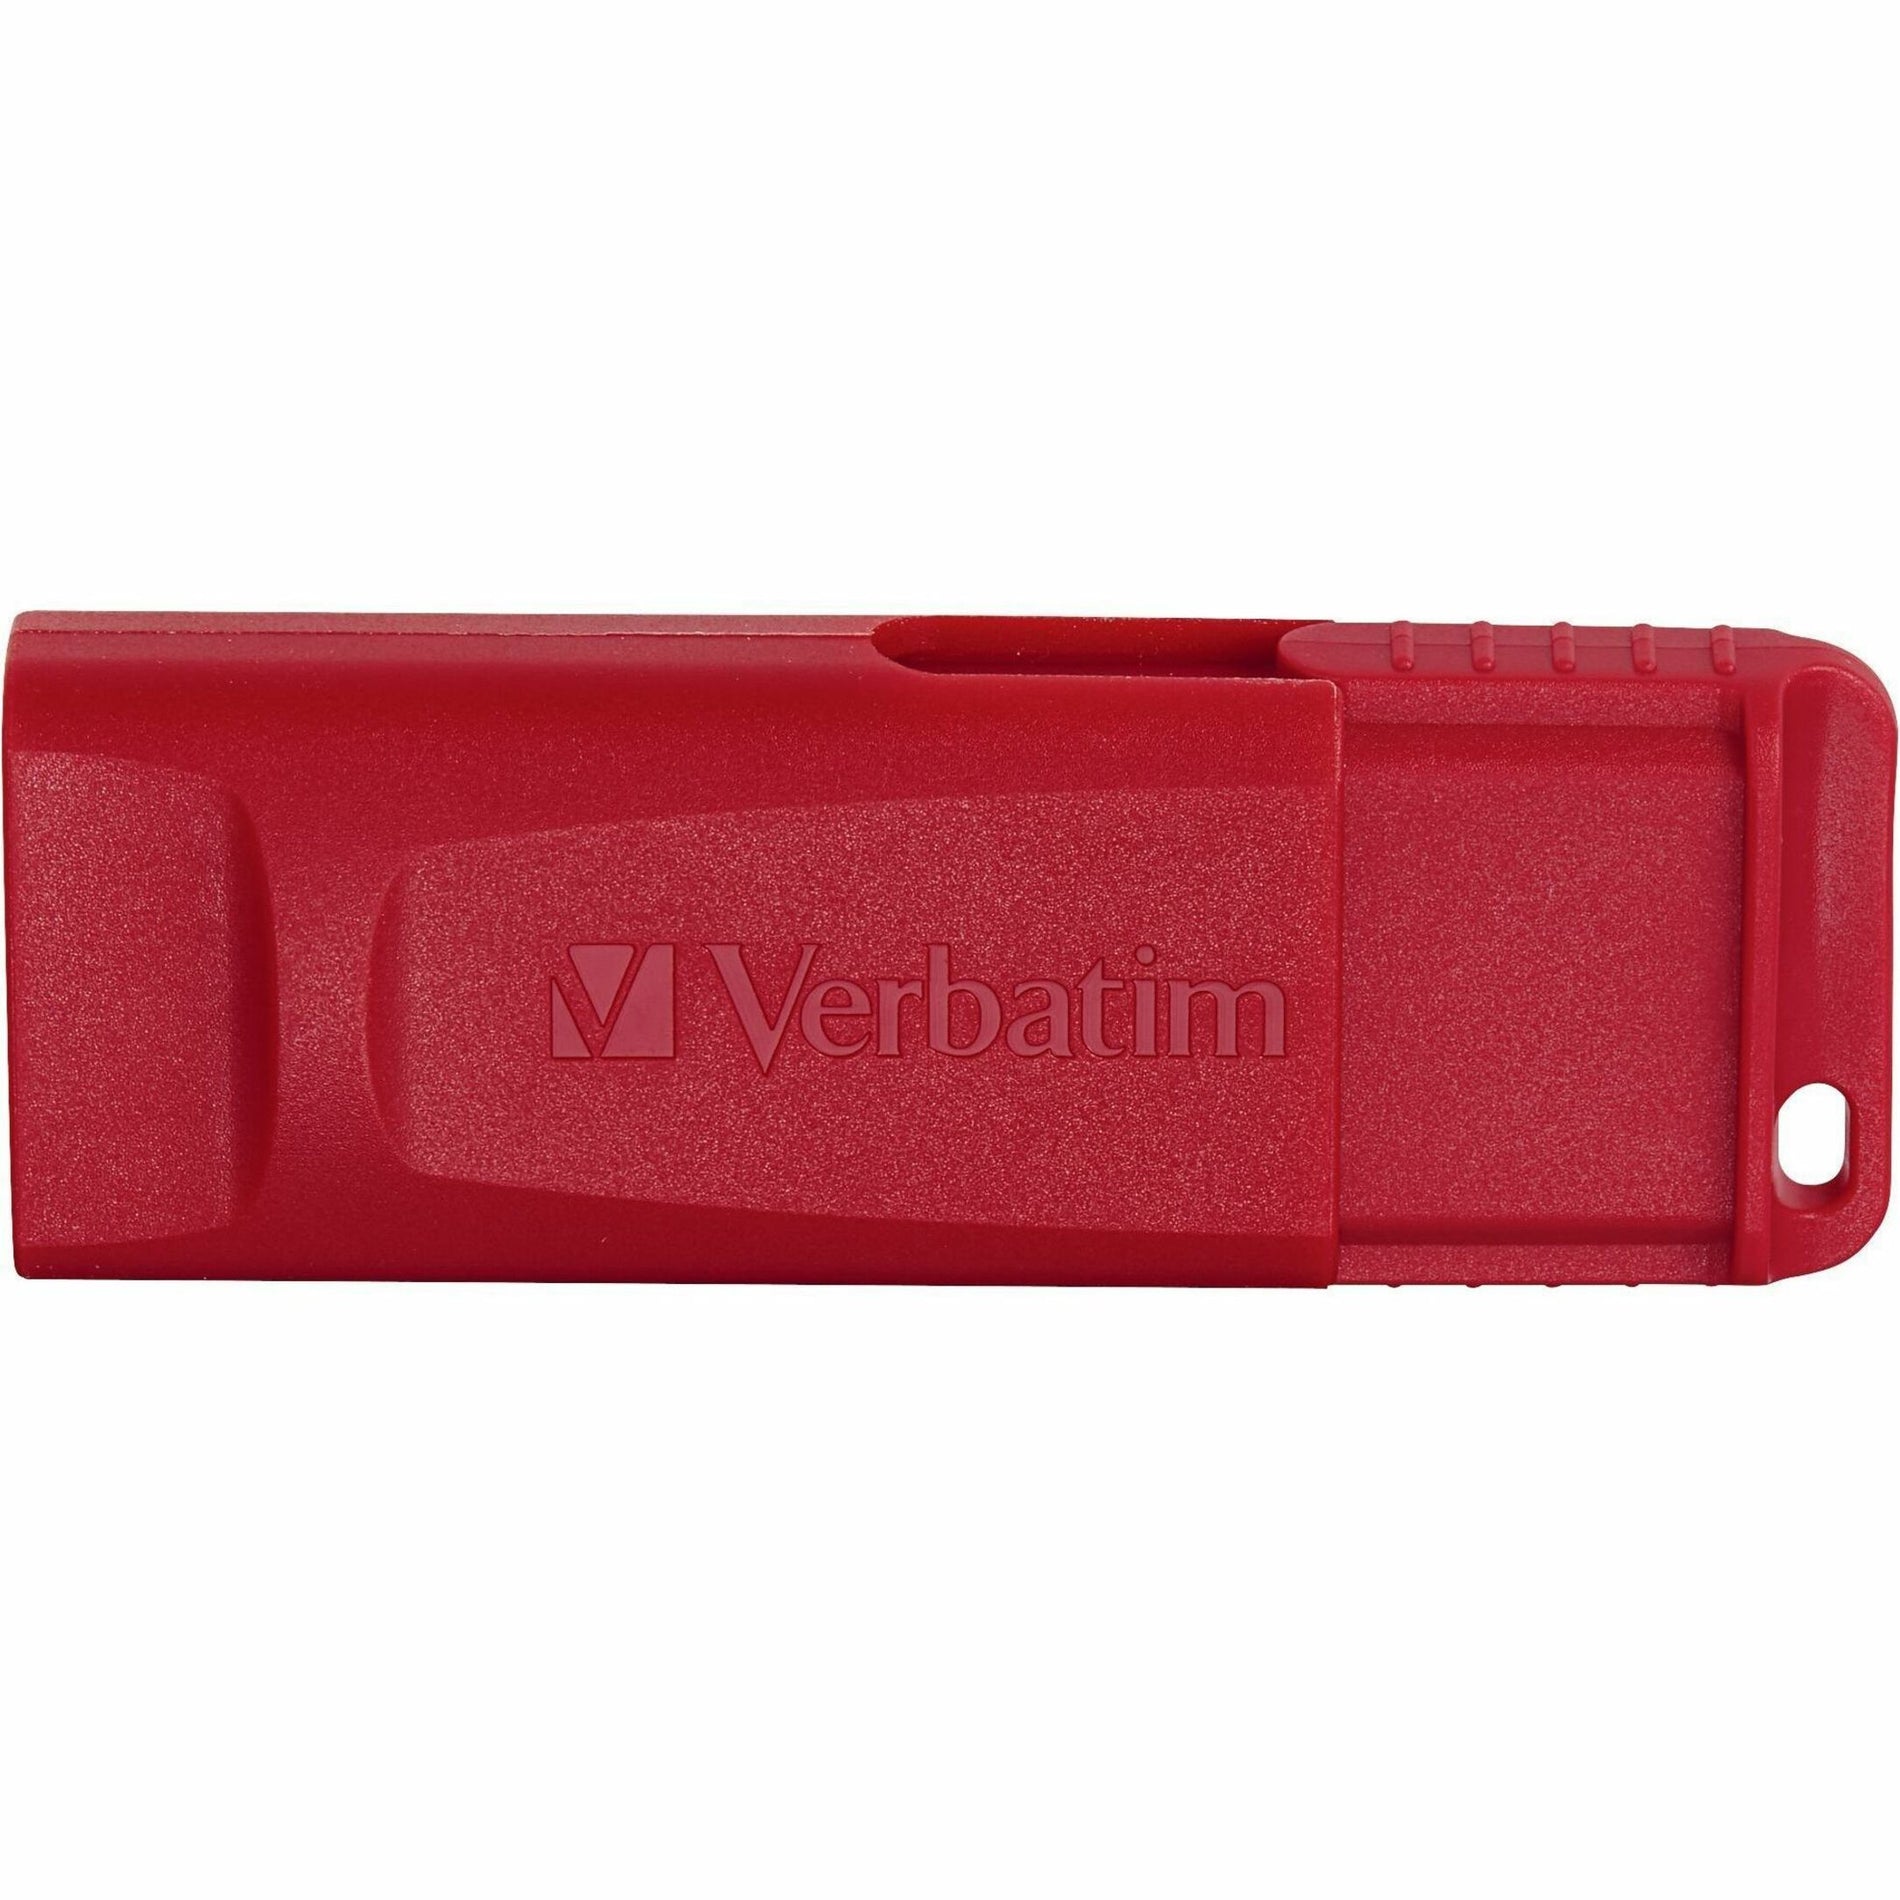 Verbatim 96806 Store 'n' Go USB Flash Drive, 32GB, Red, Capless, Antimicrobial